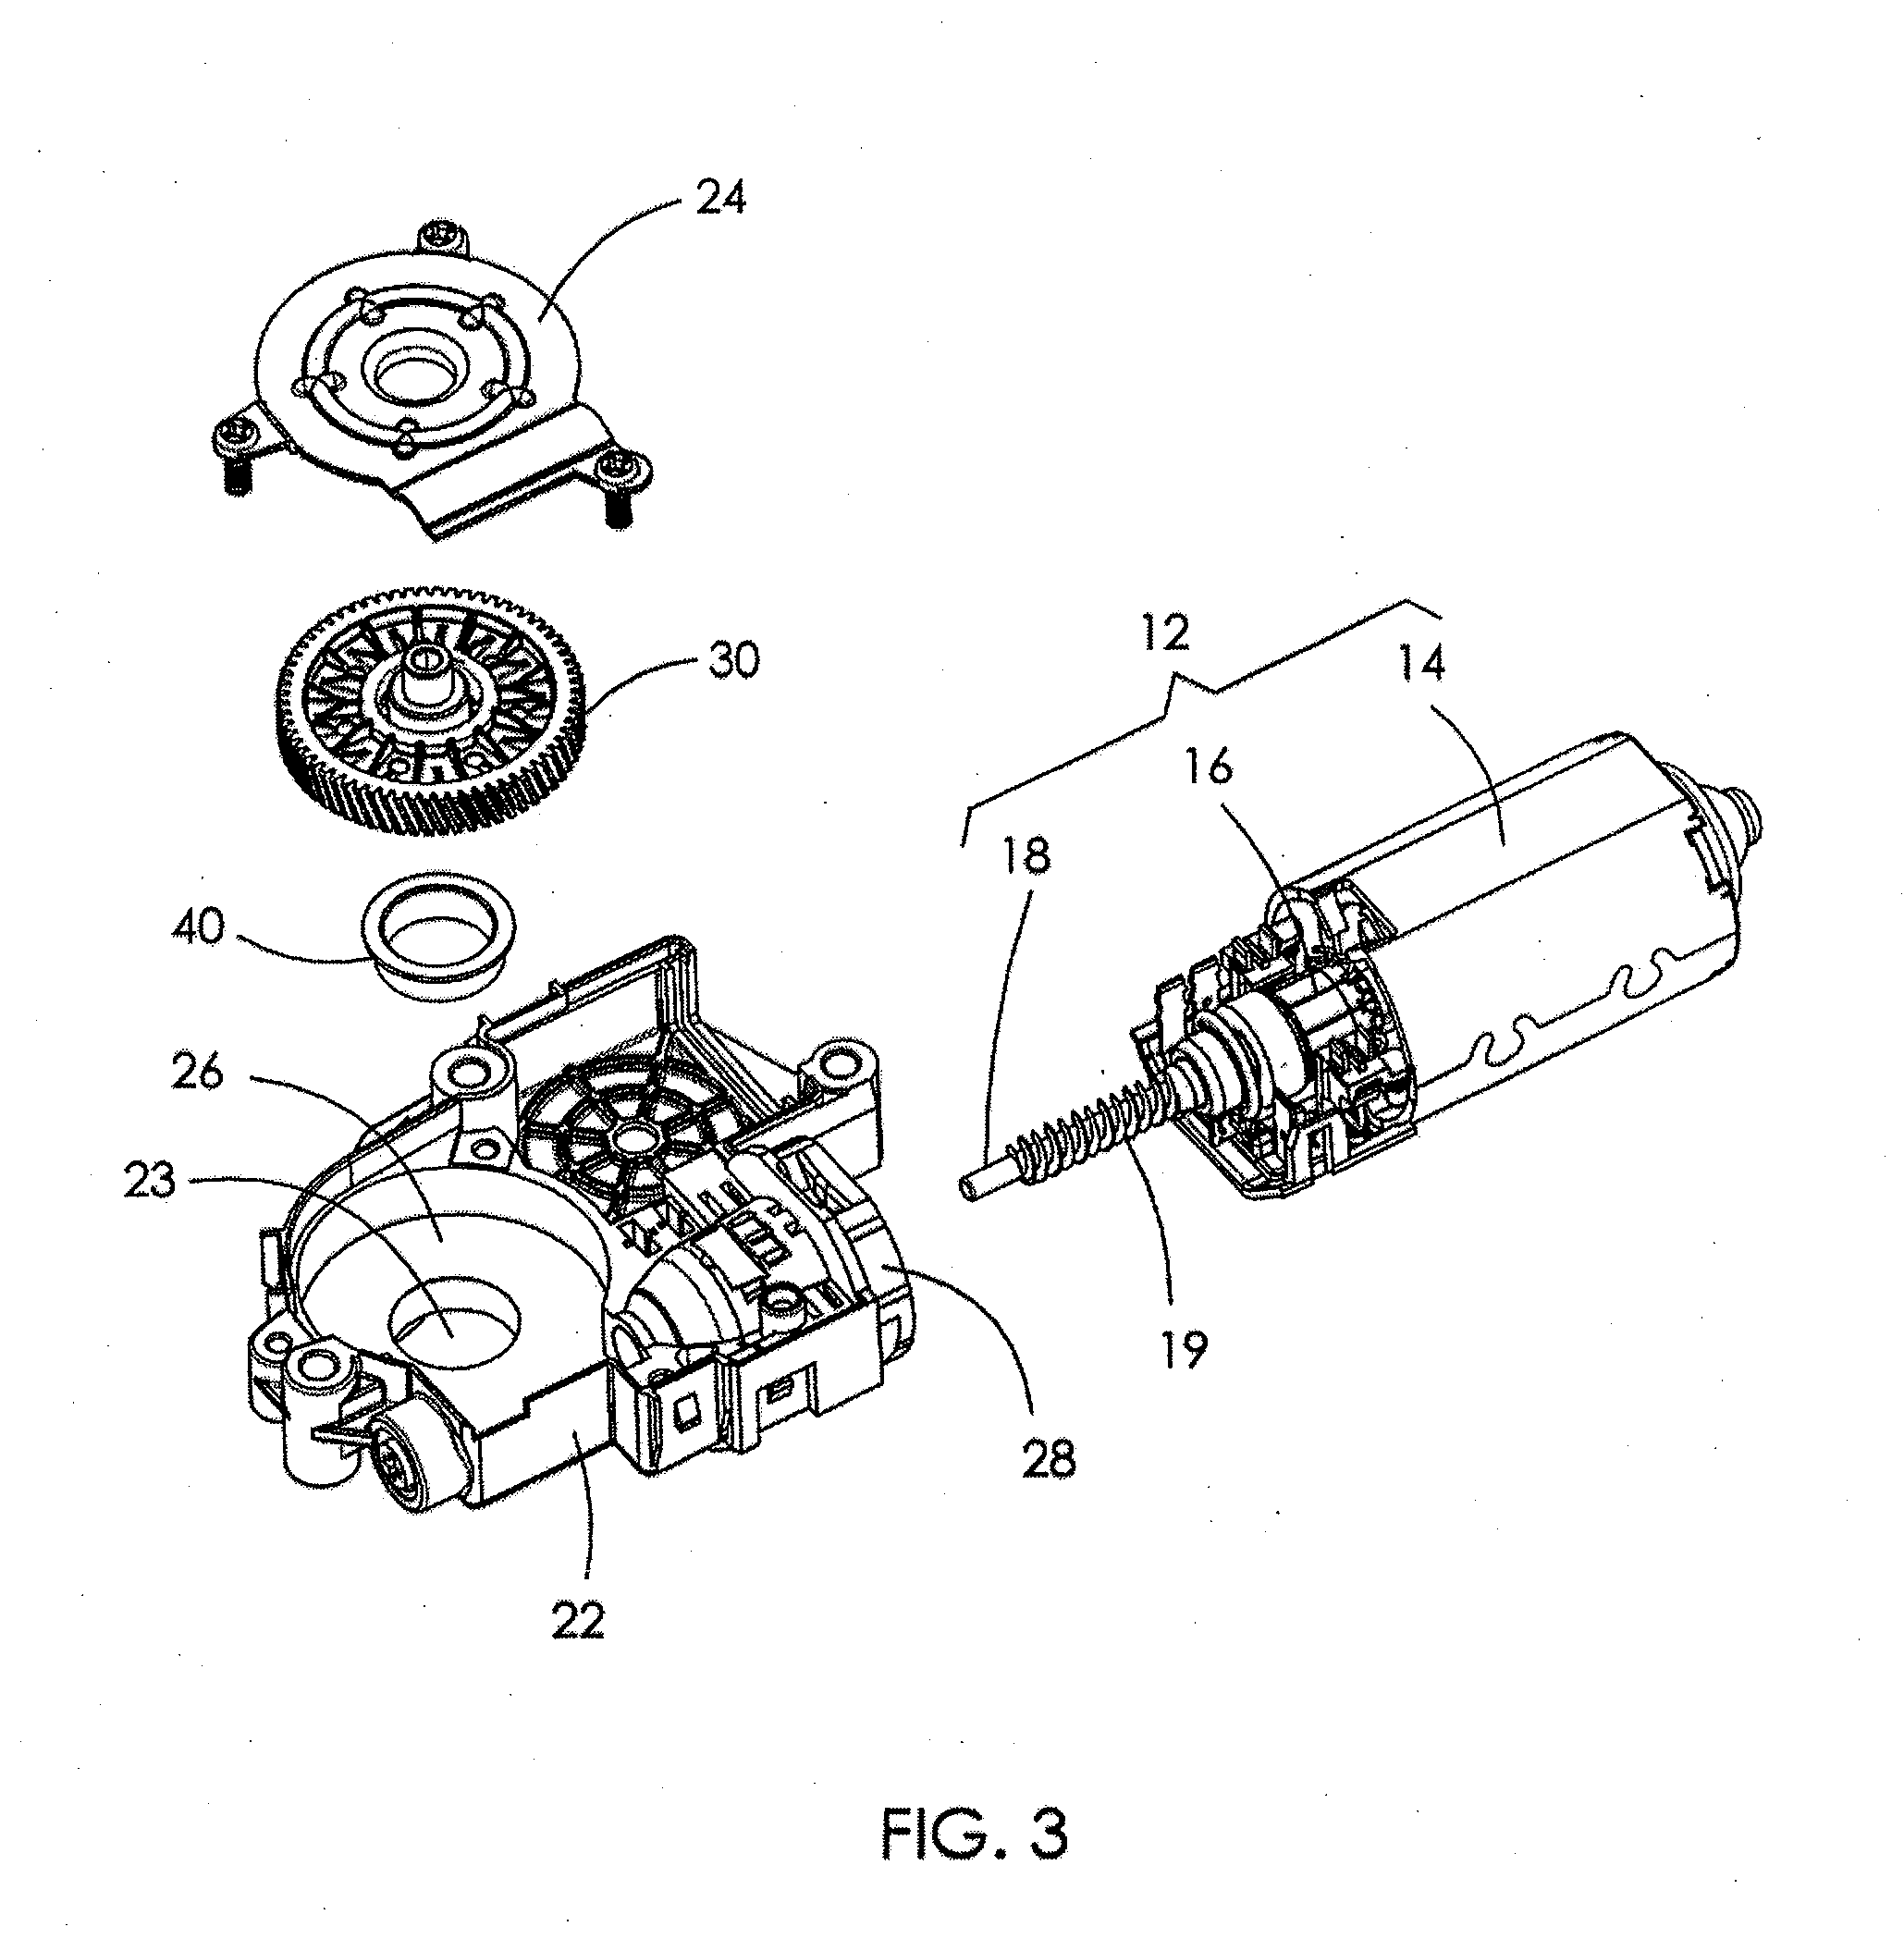 Gear motor assembly